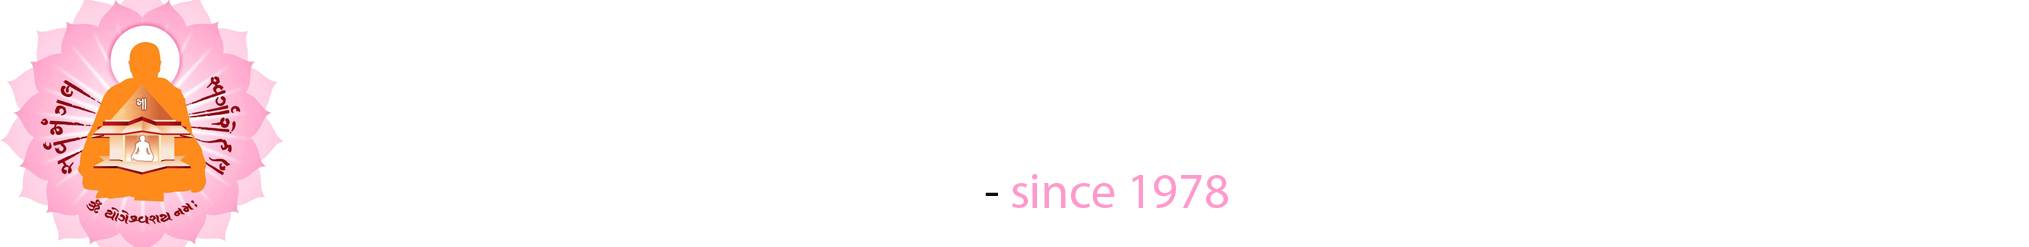 Sarvamangal Charitable Trust